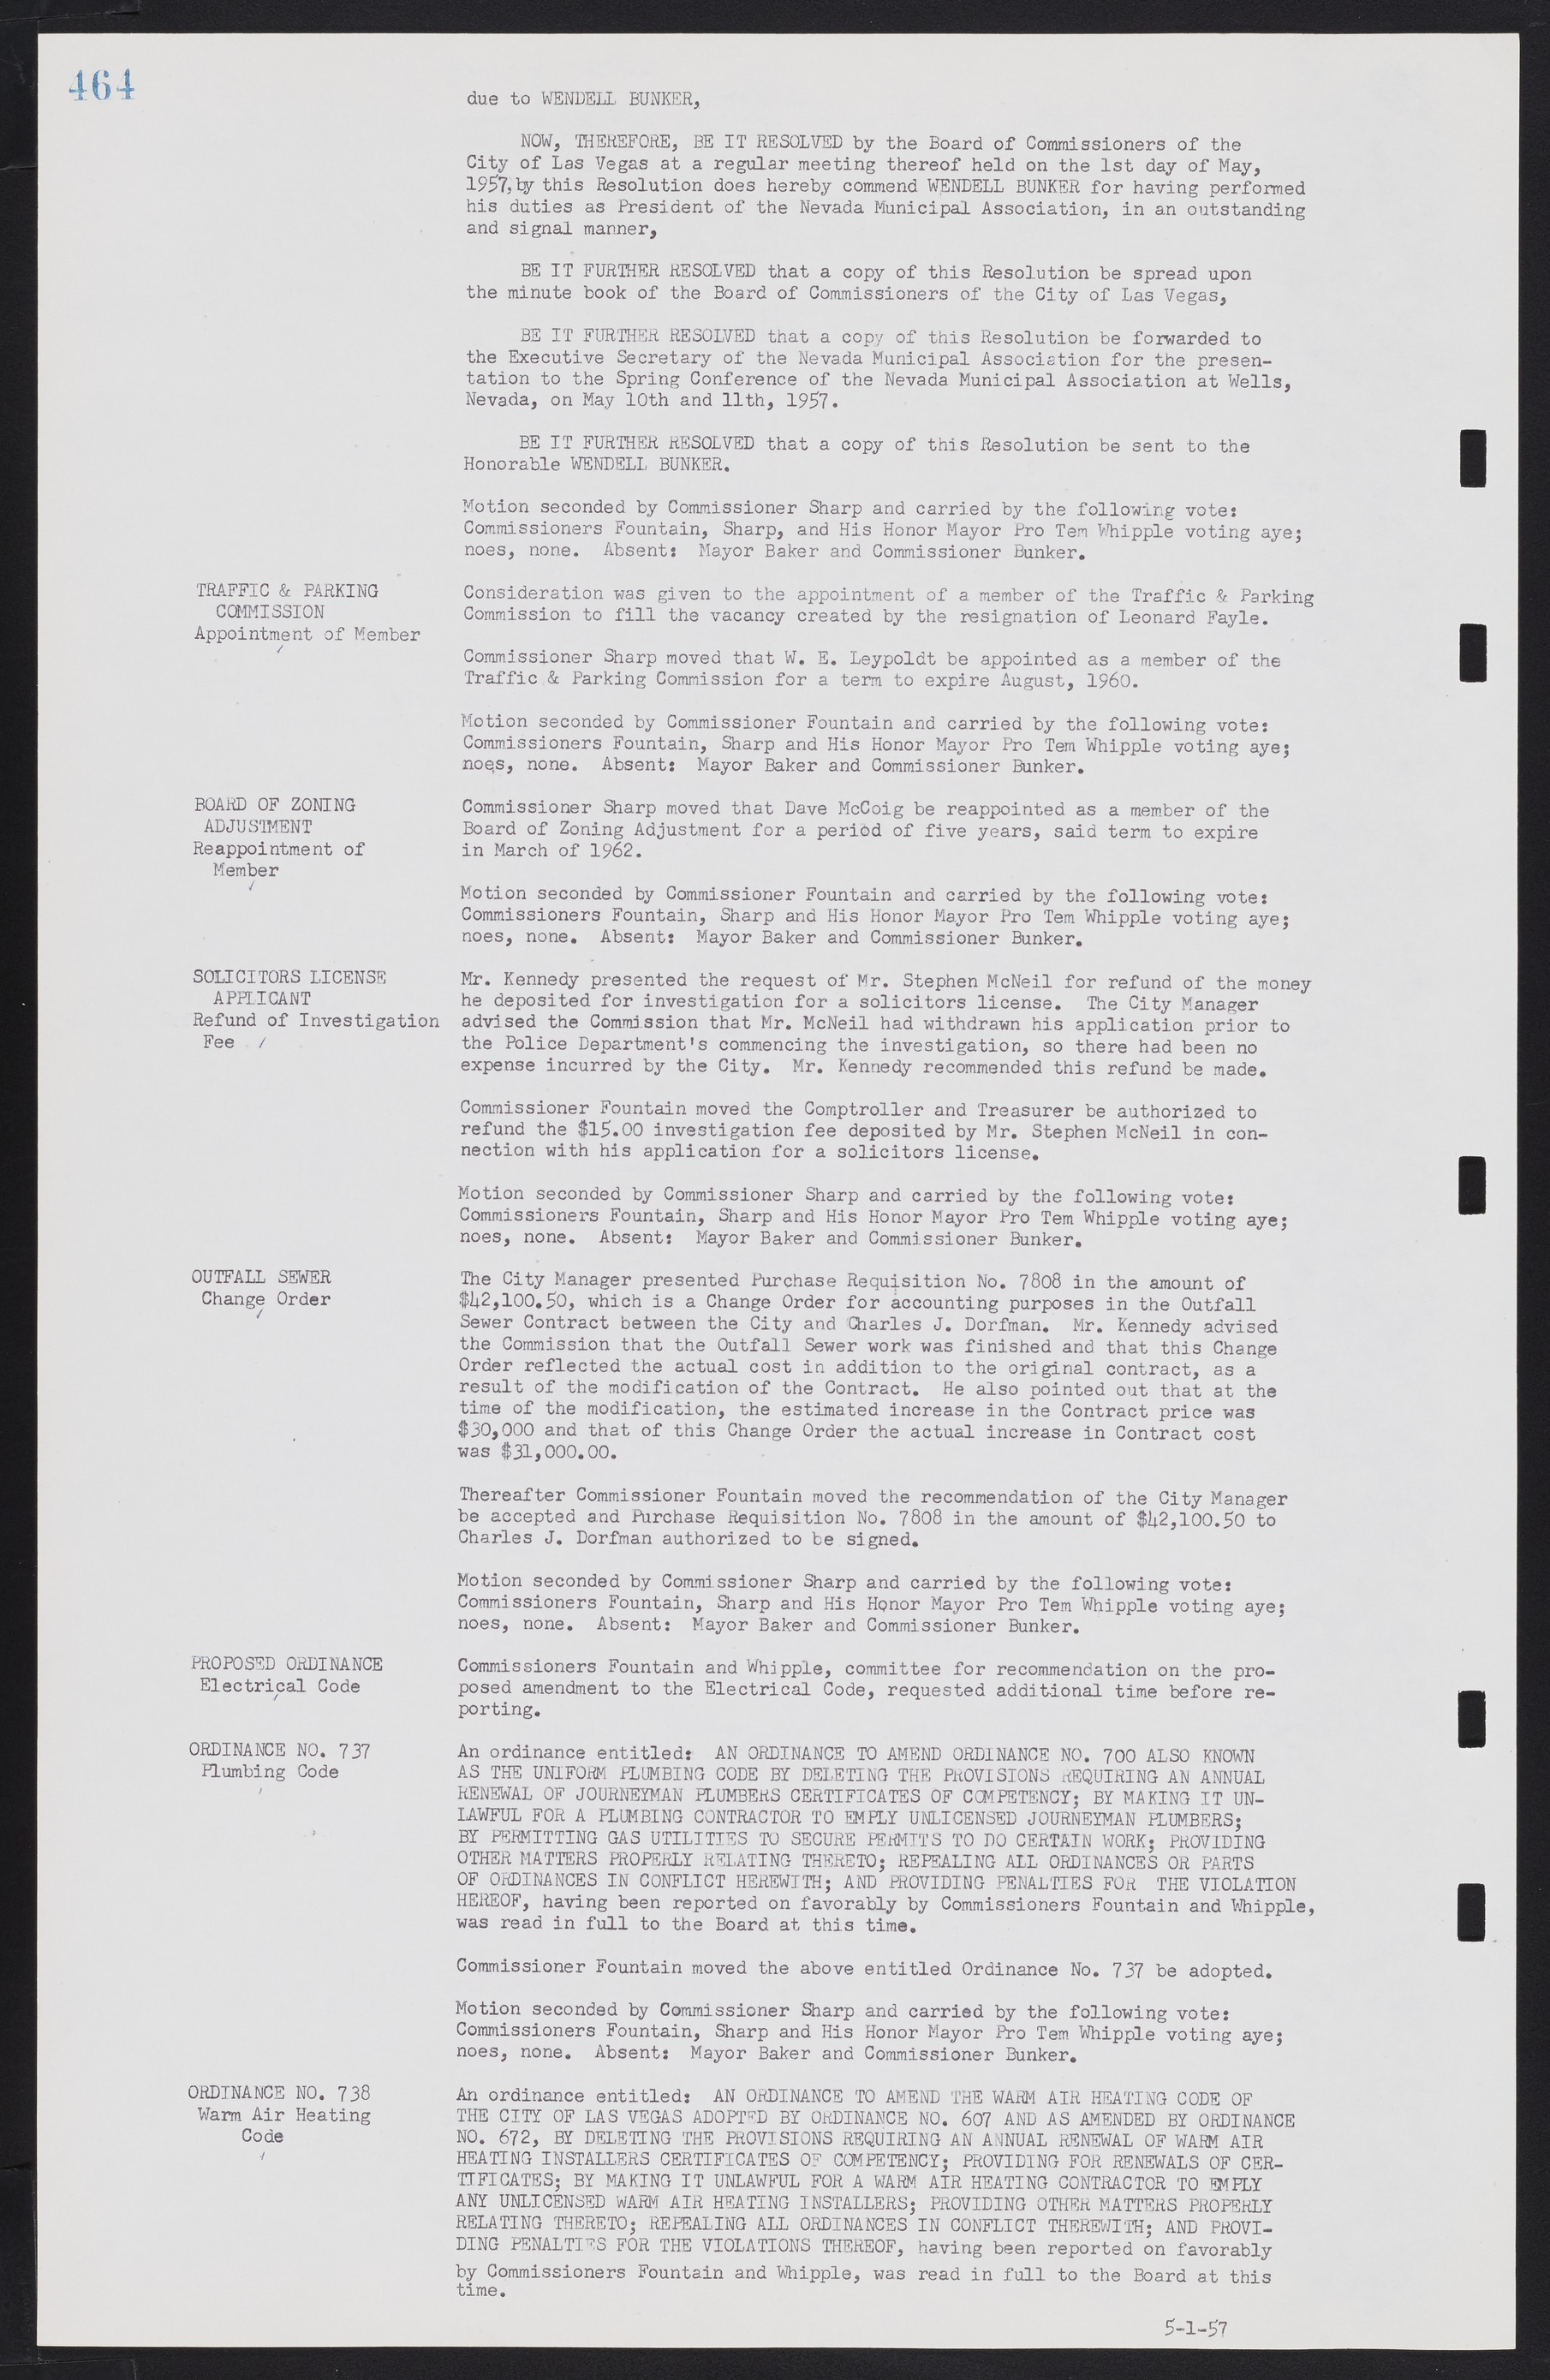 Las Vegas City Commission Minutes, September 21, 1955 to November 20, 1957, lvc000010-484